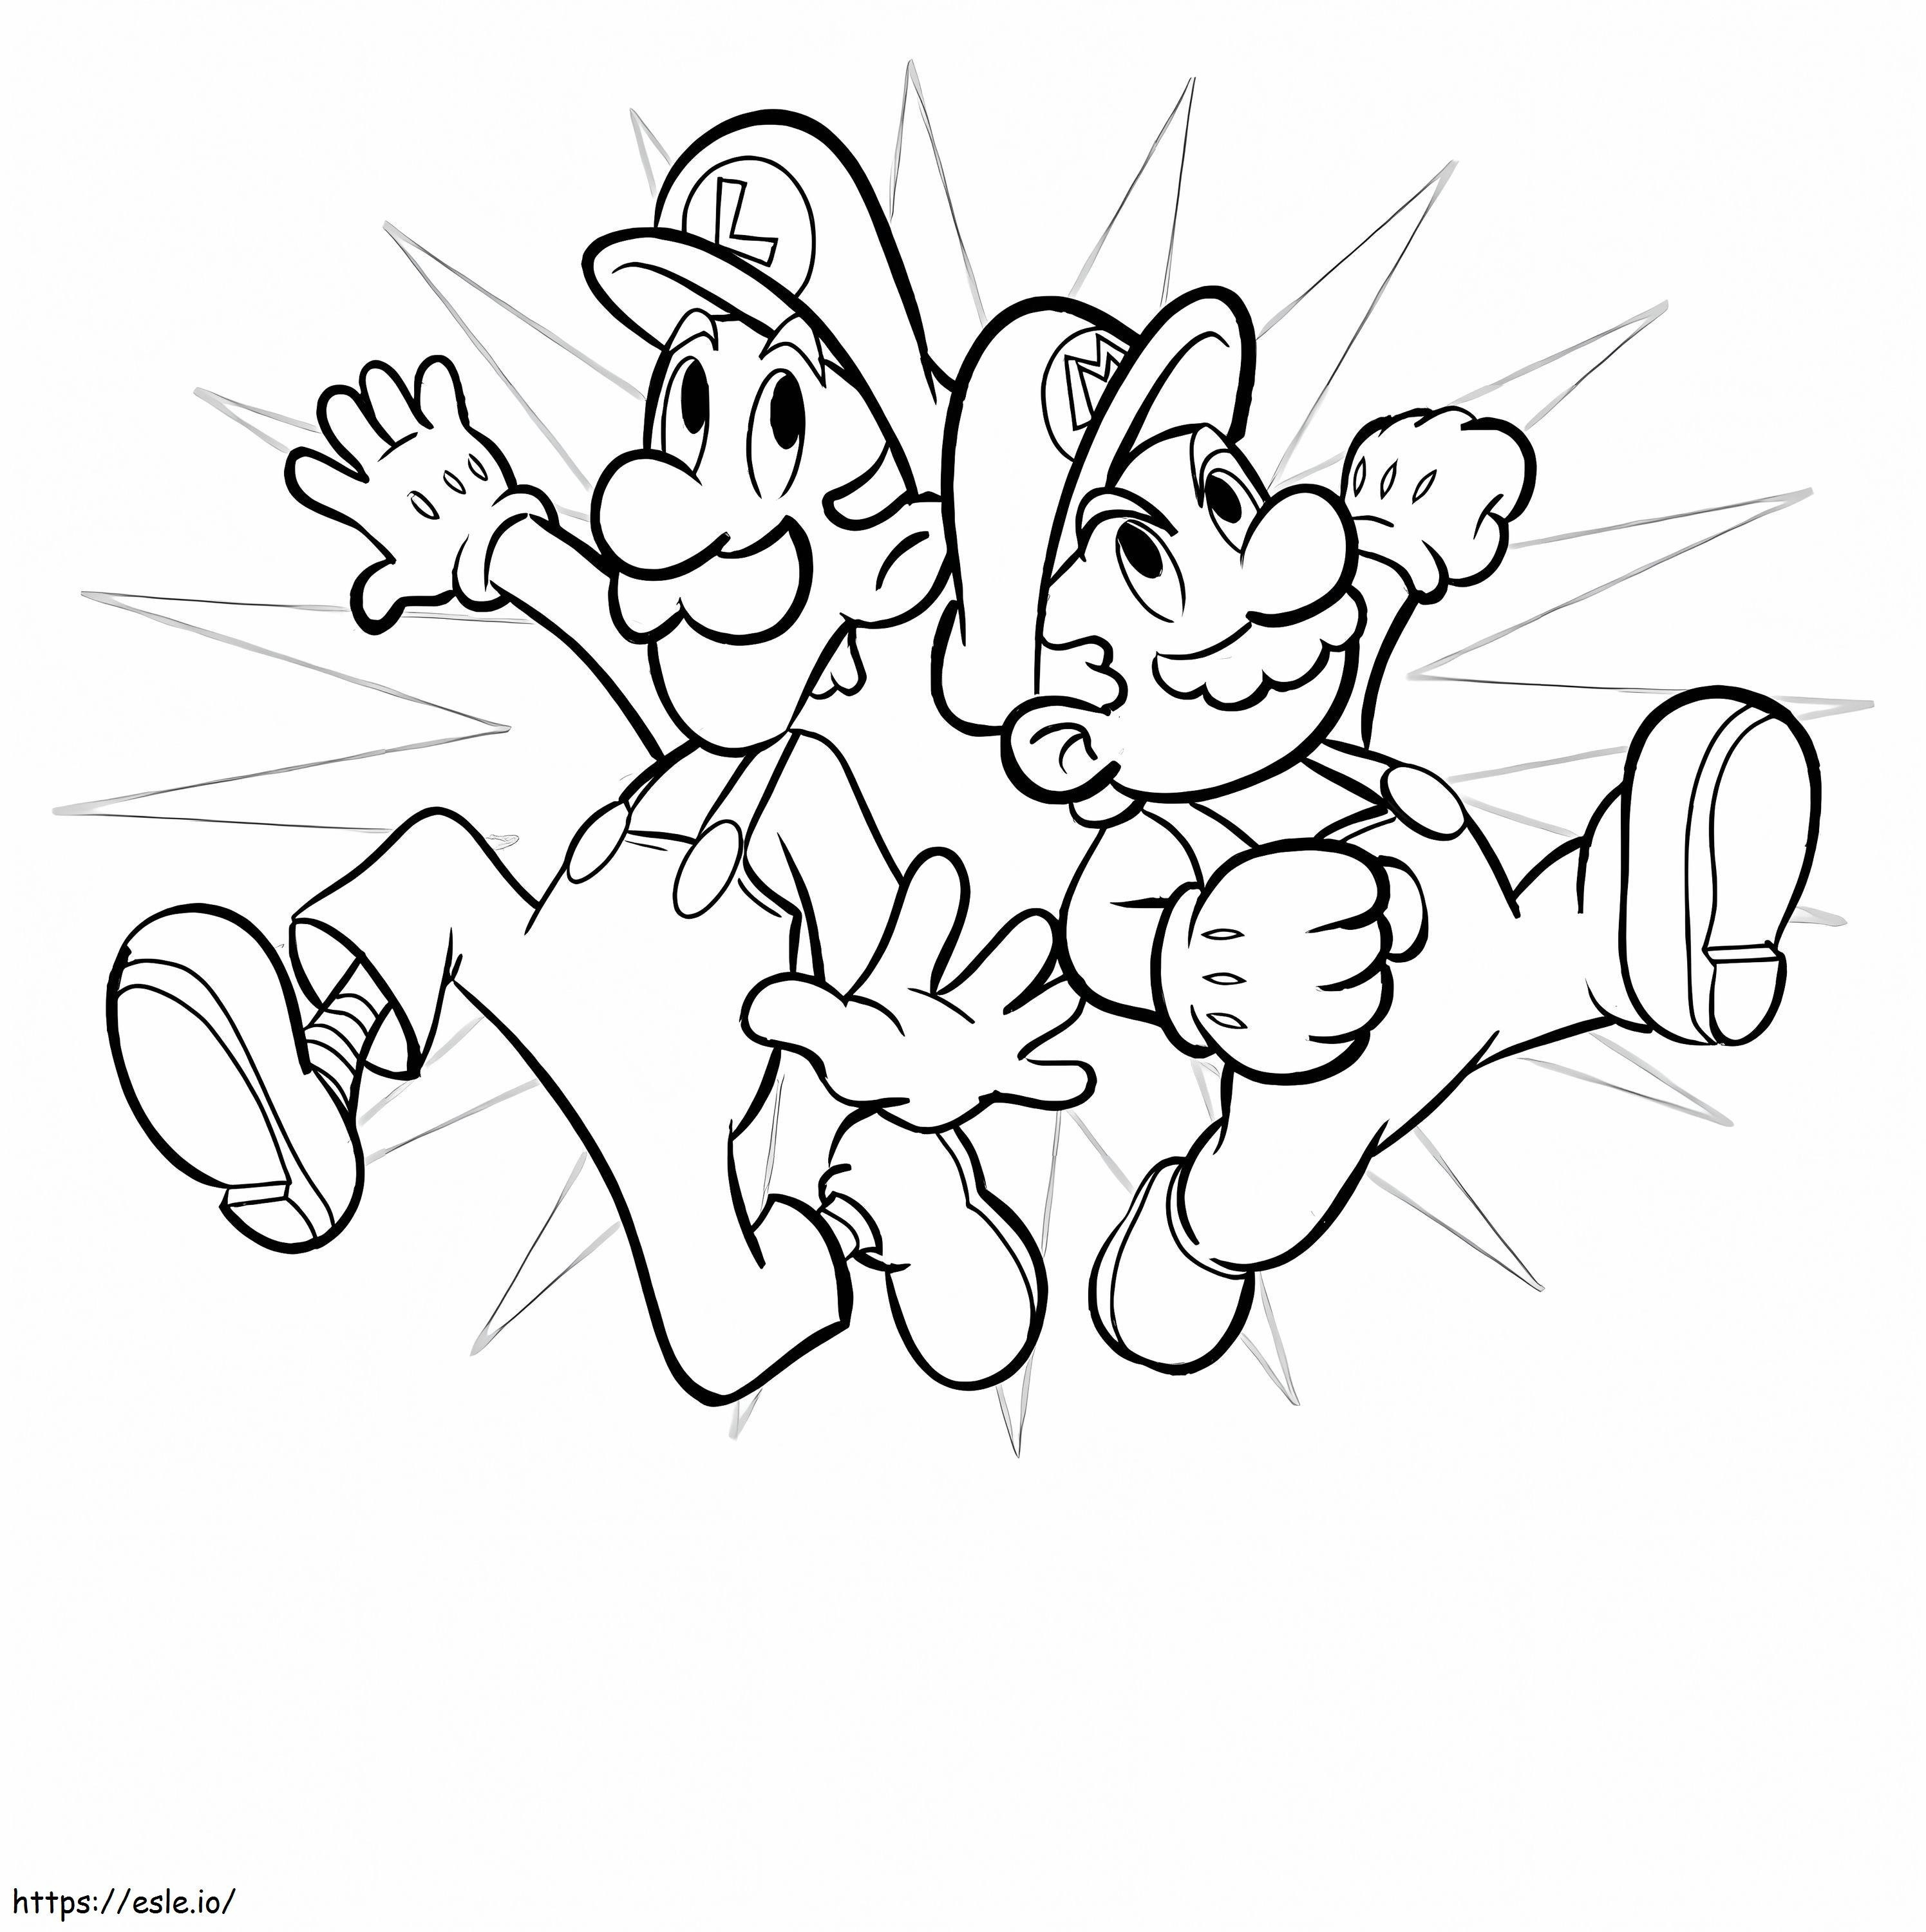 Nice Luigi And Mario coloring page